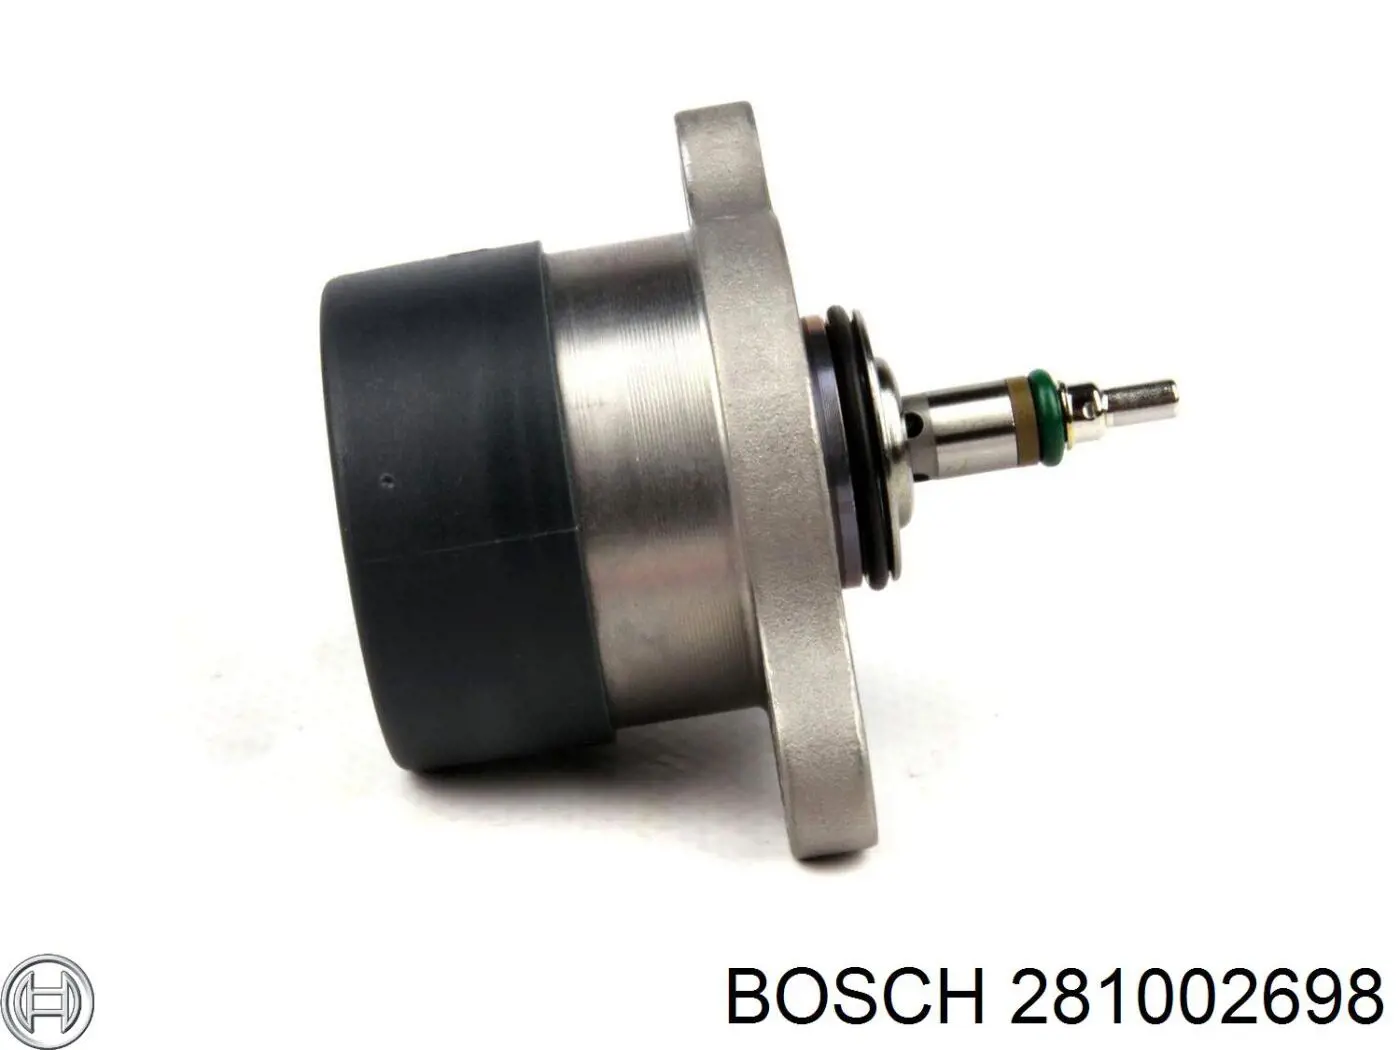 281002698 Bosch regulador de presión de combustible